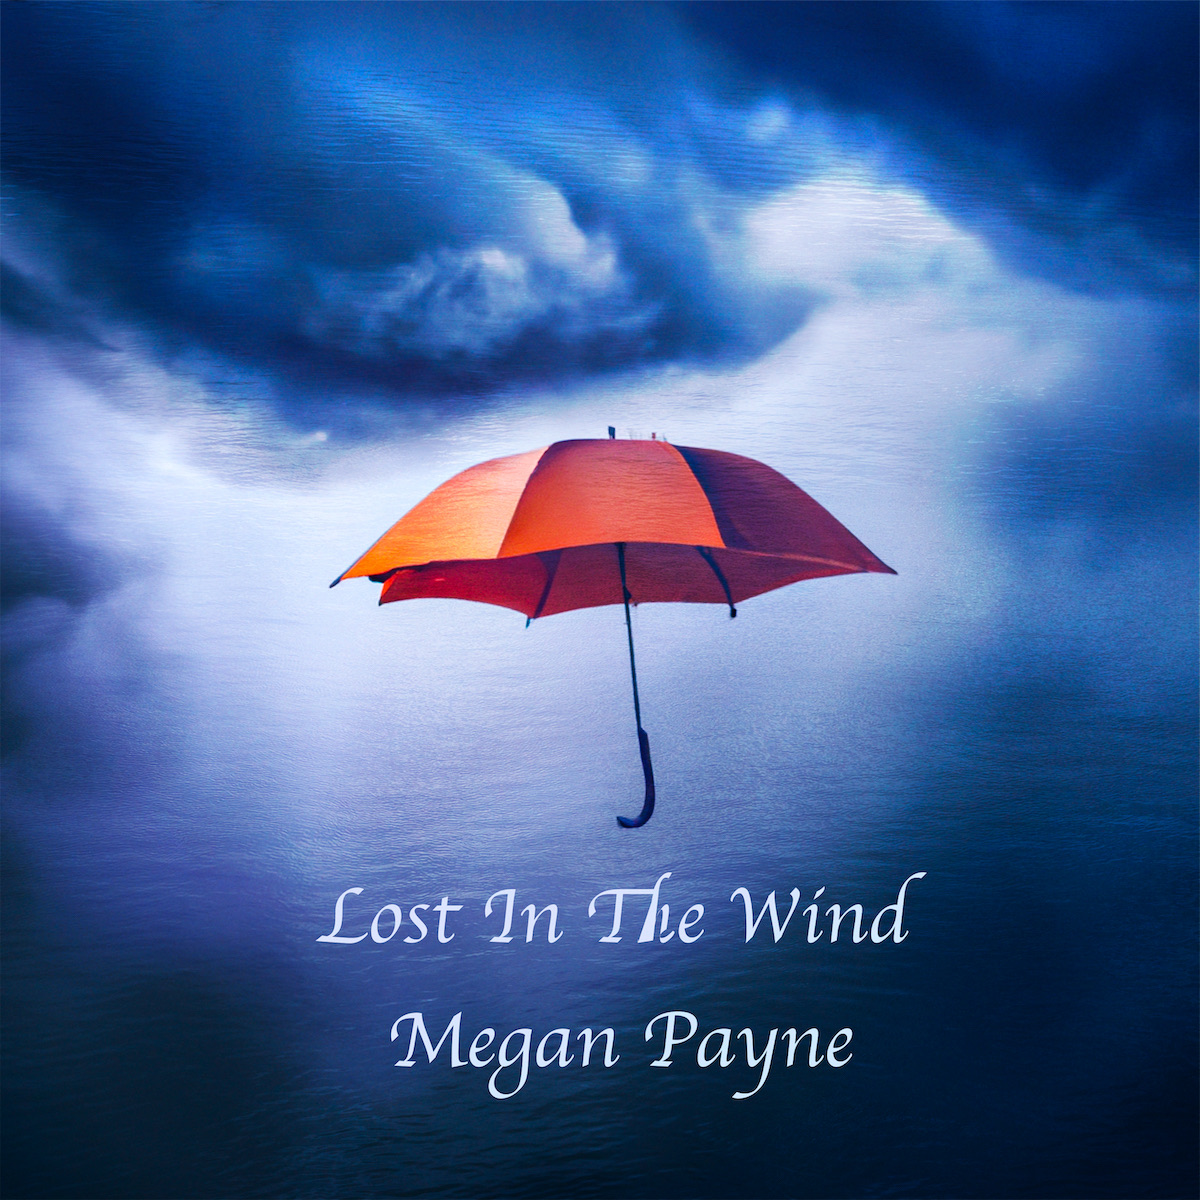 DEBUT SINGLE: “Lost in the Wind” by Megan Payne